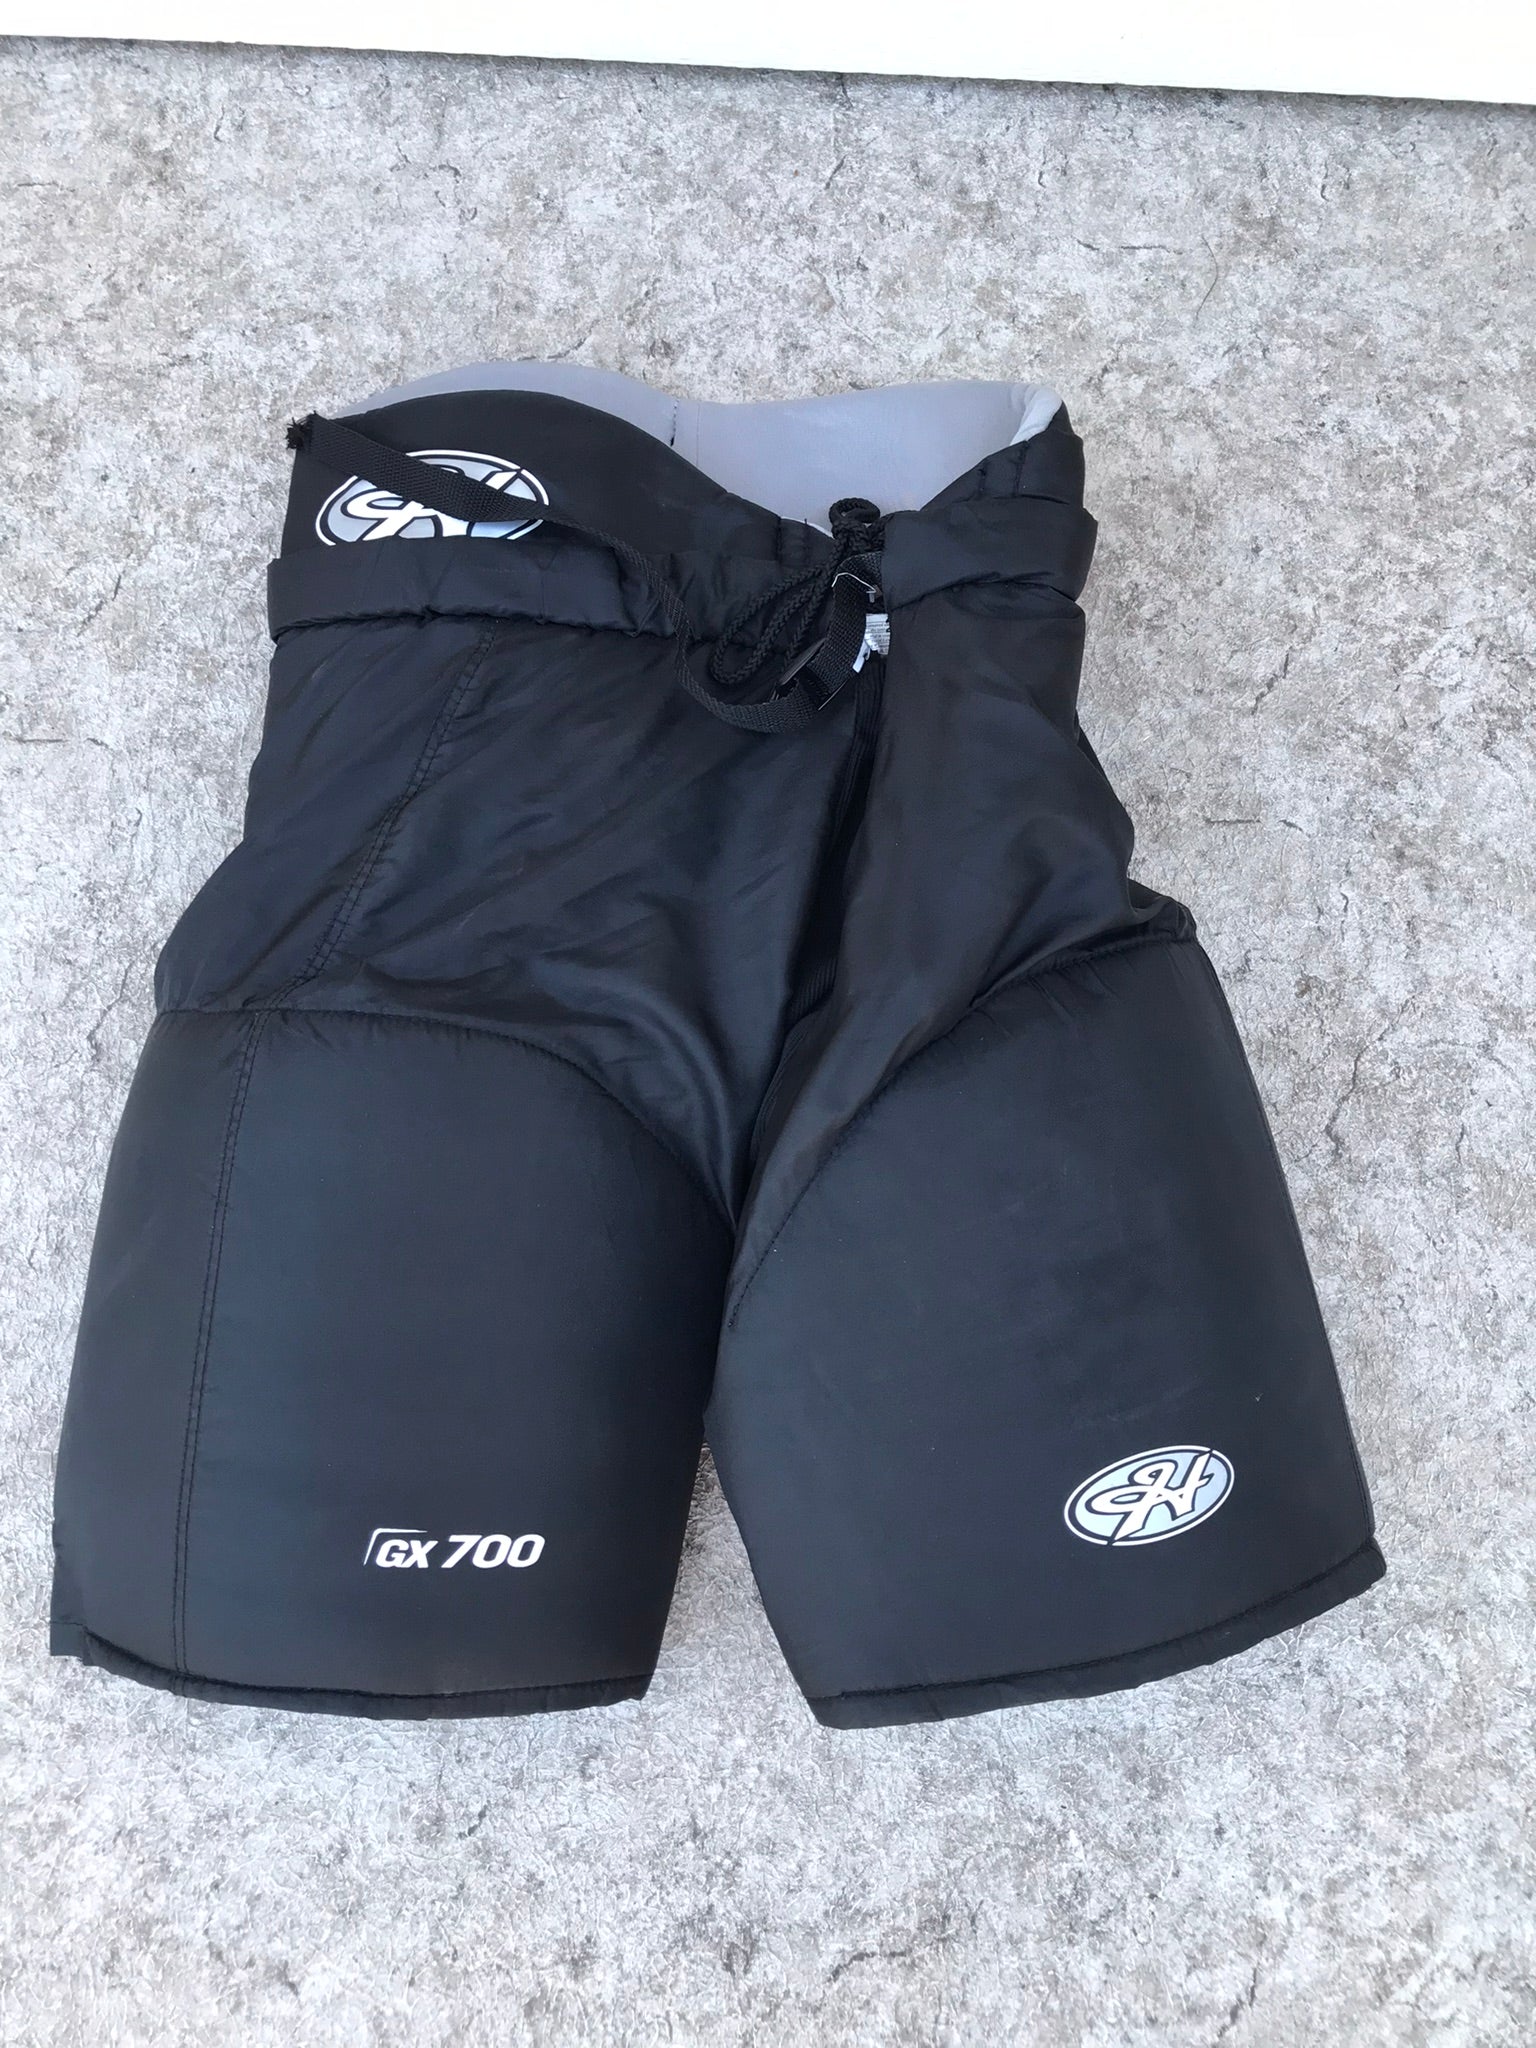 Hockey Pants Men's Size Small Hespeler GX700 – KidsStuffCanada